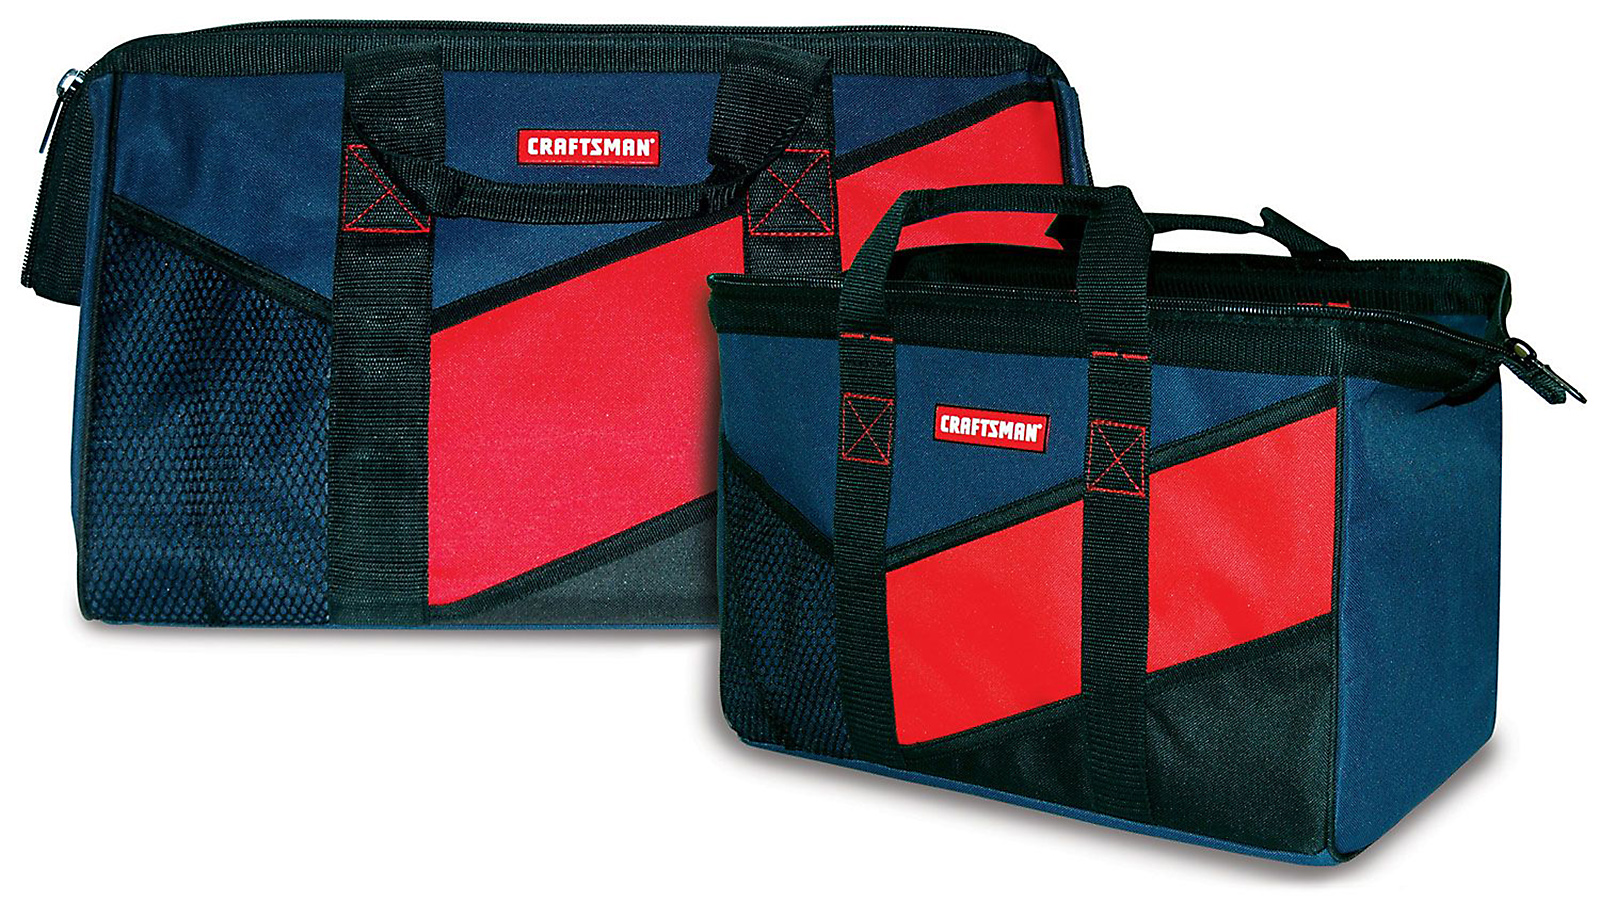 16″ and 20″ Craftsman Tool Bag Set Only $11.88 + Free Pickup!